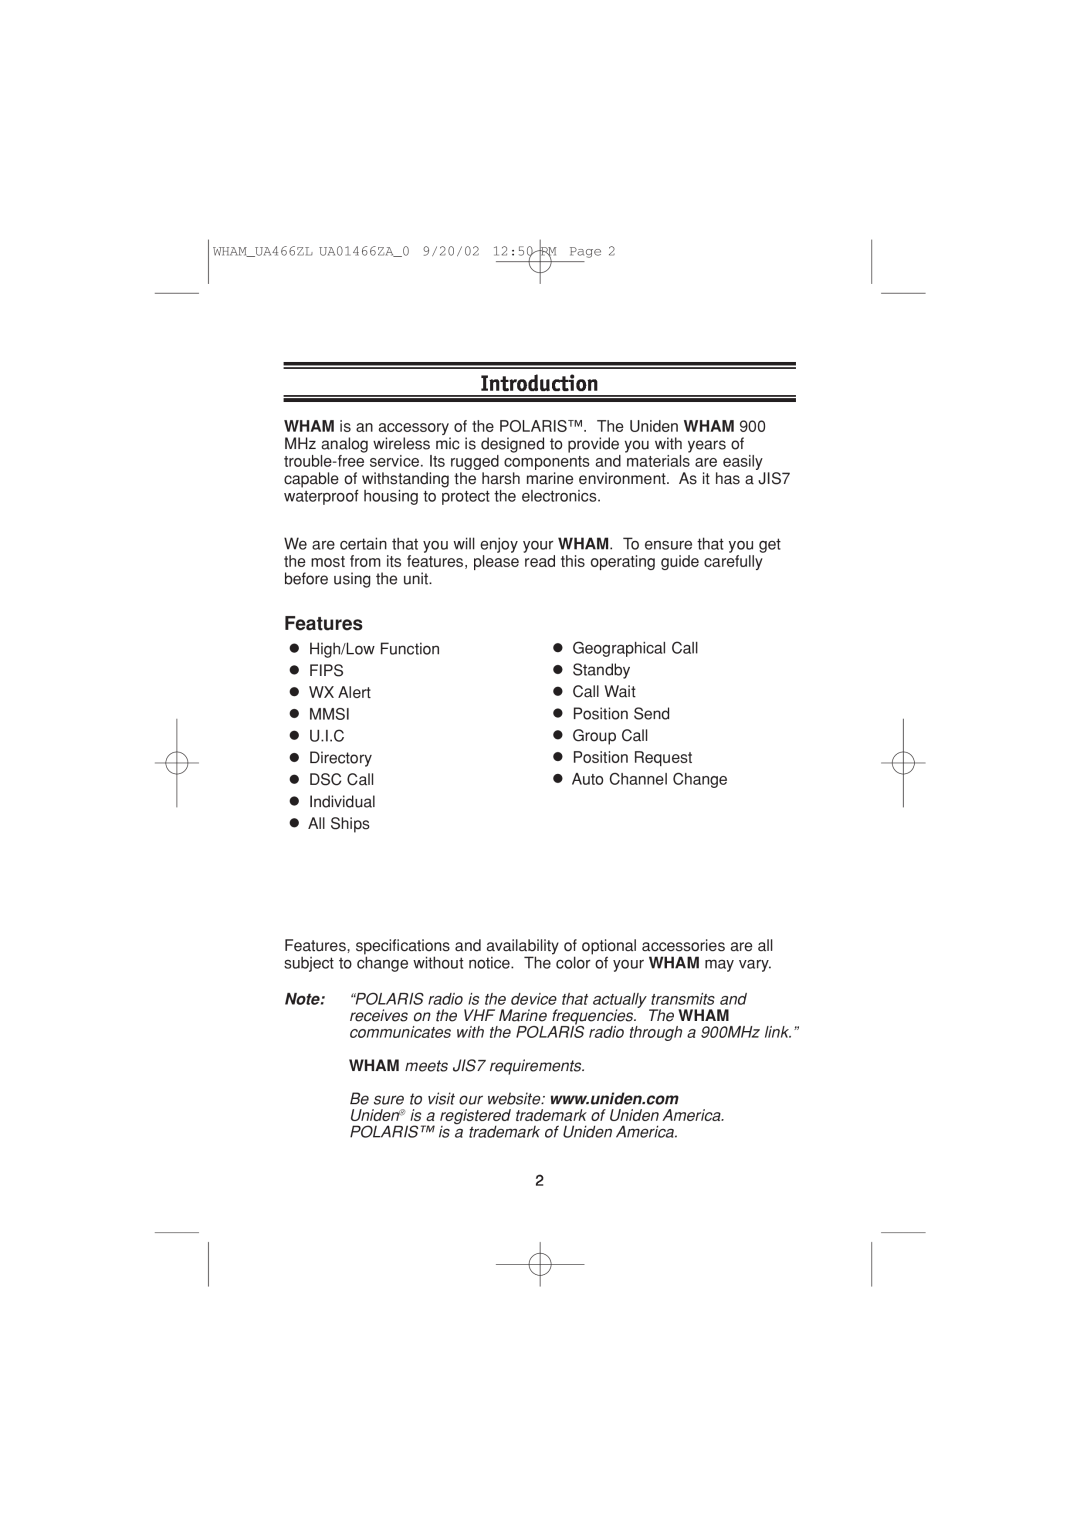 Uniden UA466ZL manual Introduction, Features 